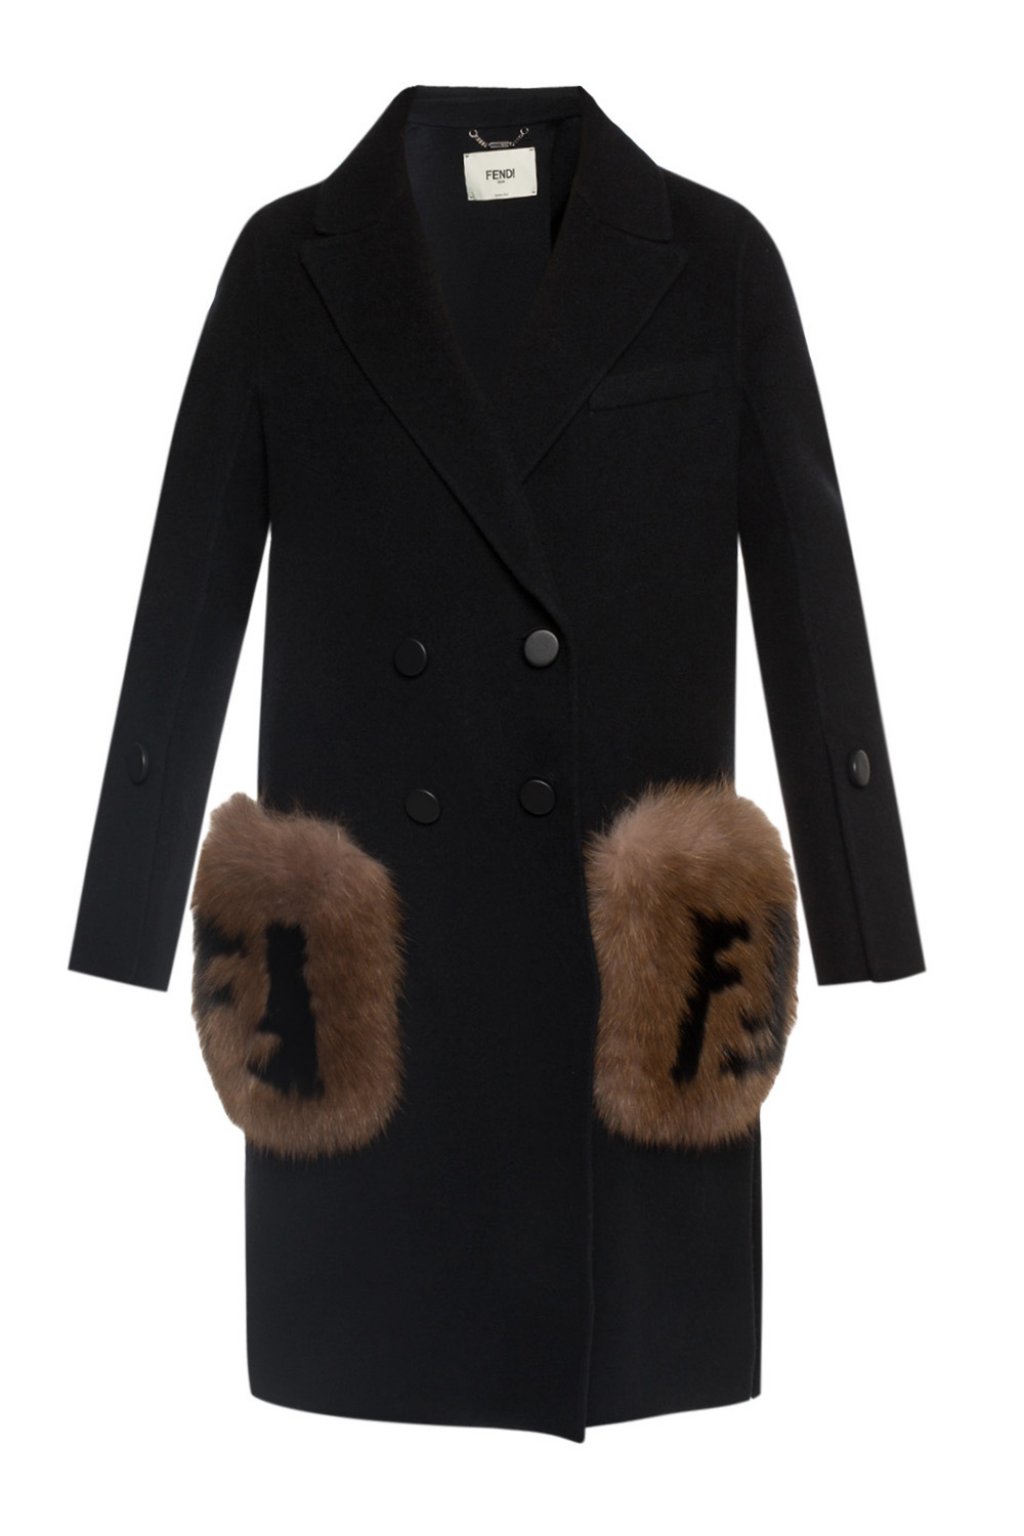 fendi wool coat